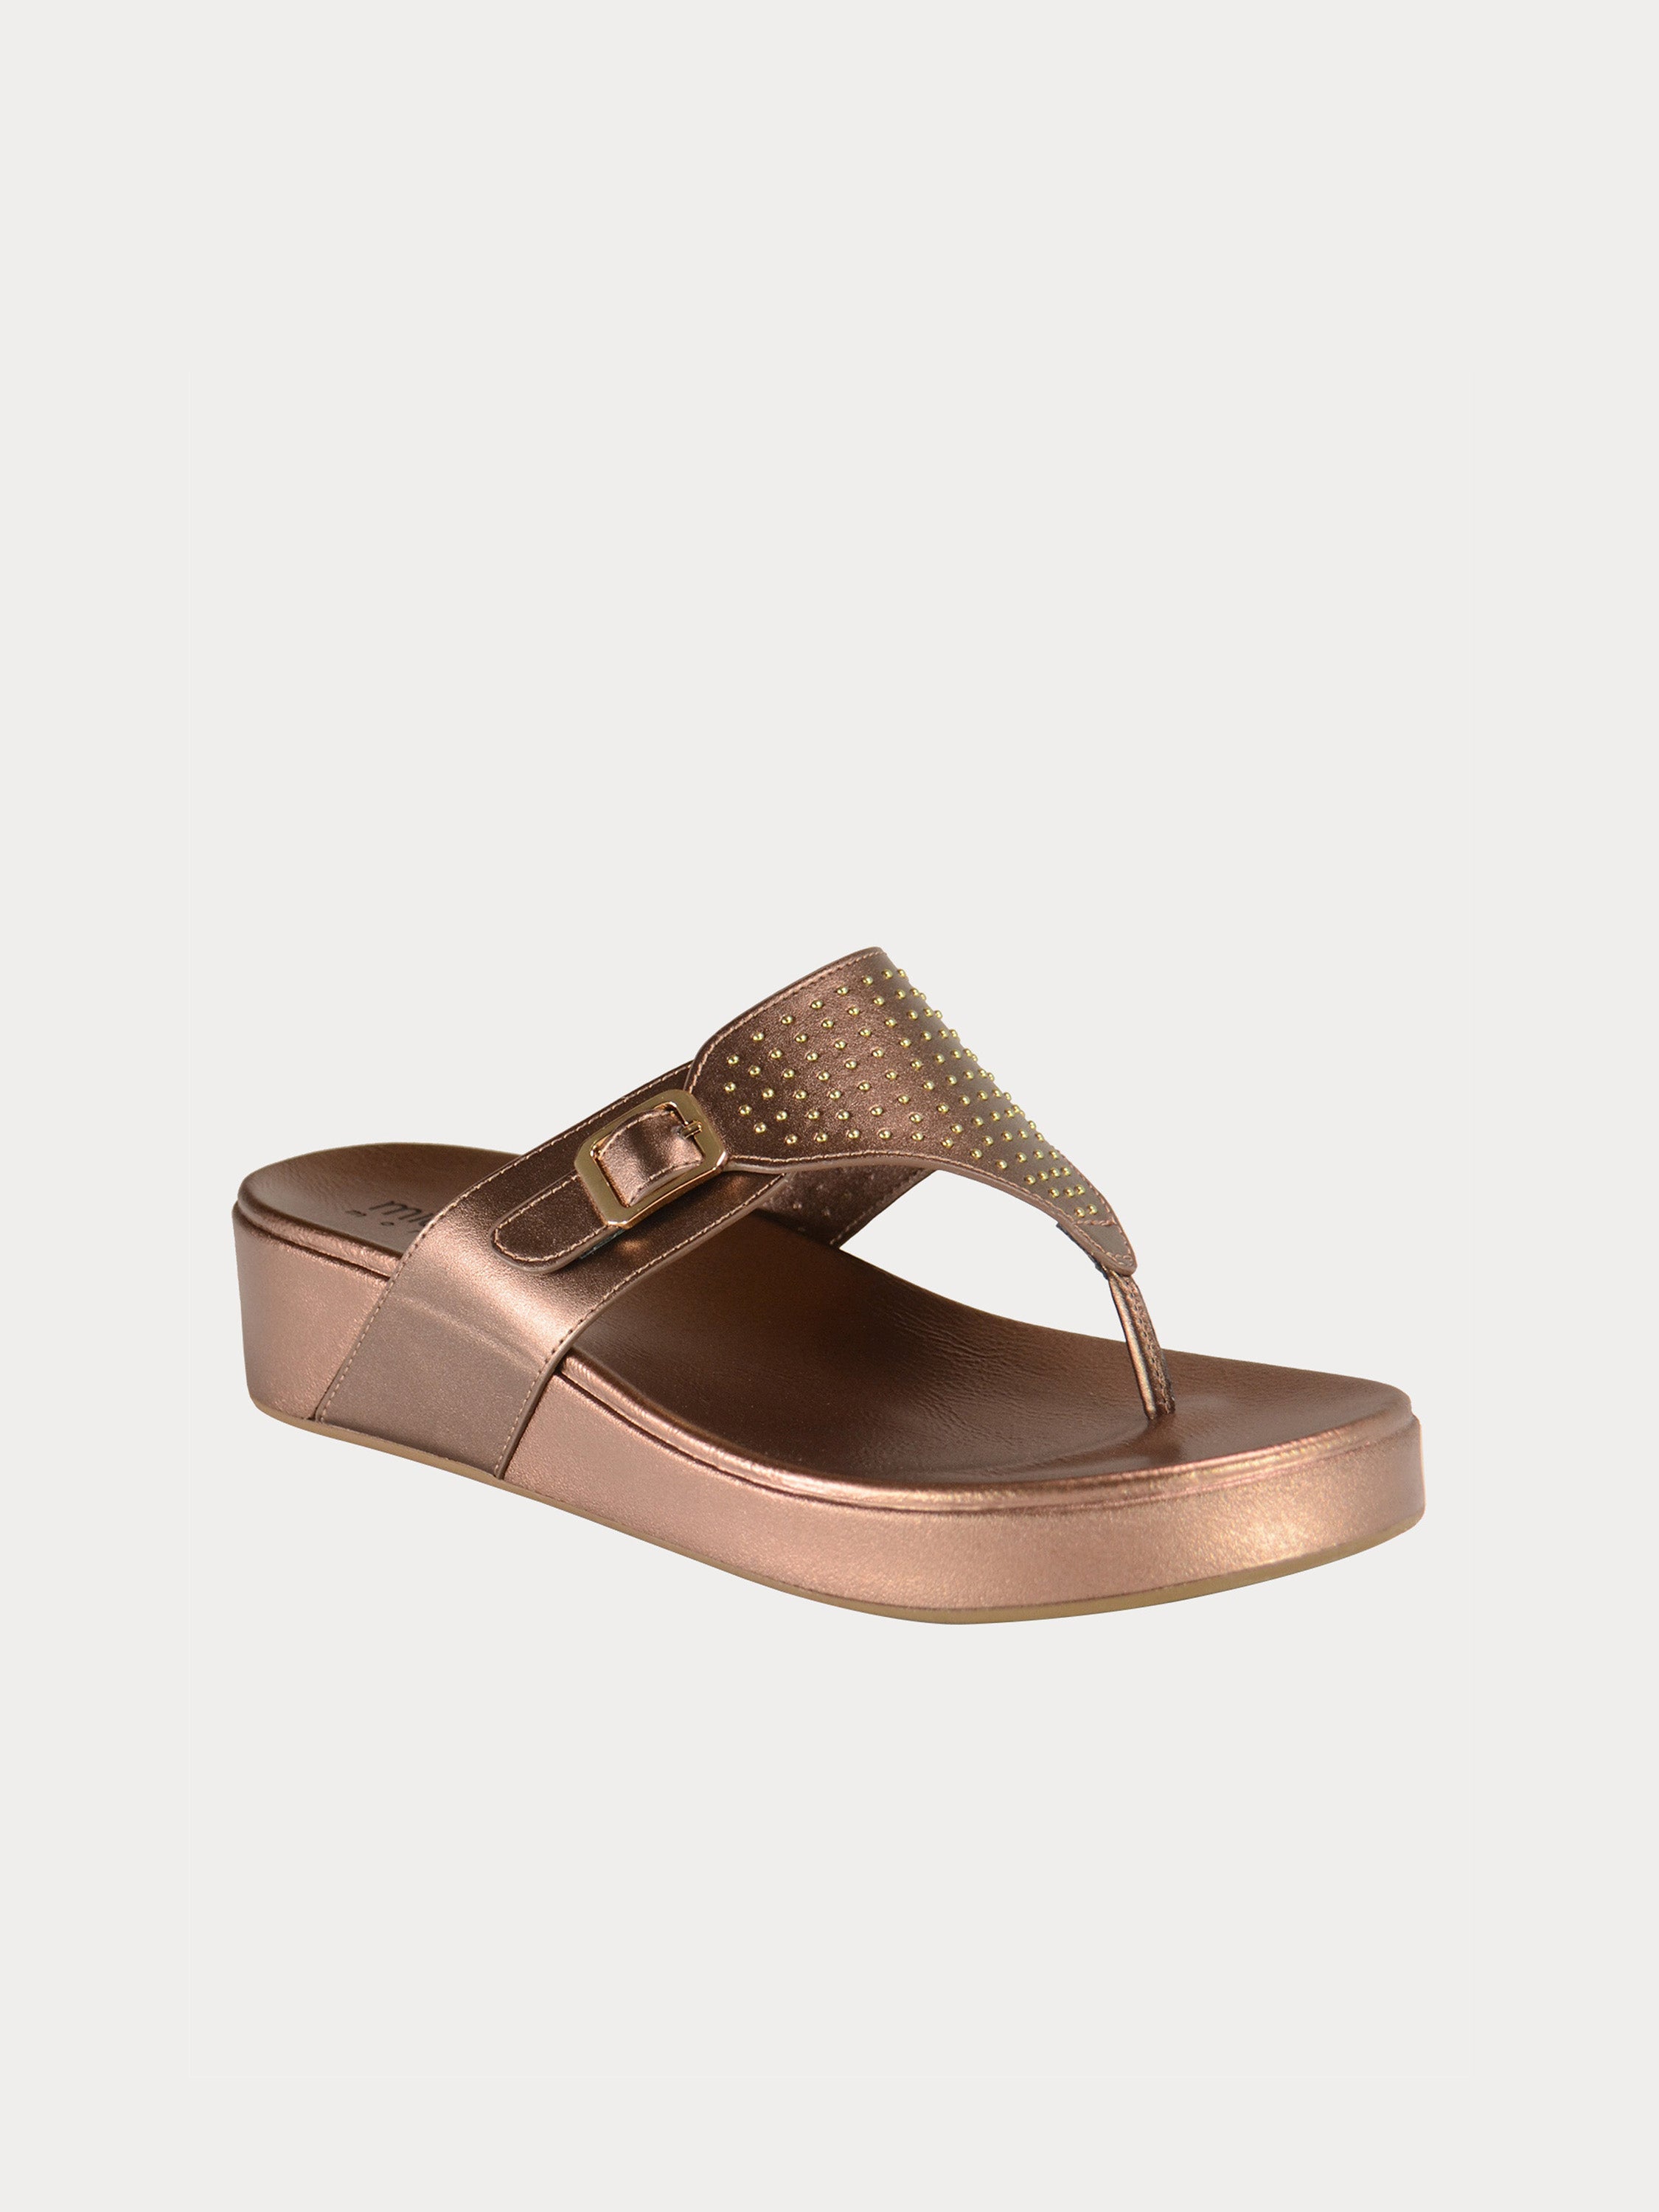 Michelle Morgan 714879 Women's Slider Sandals #color_Brown